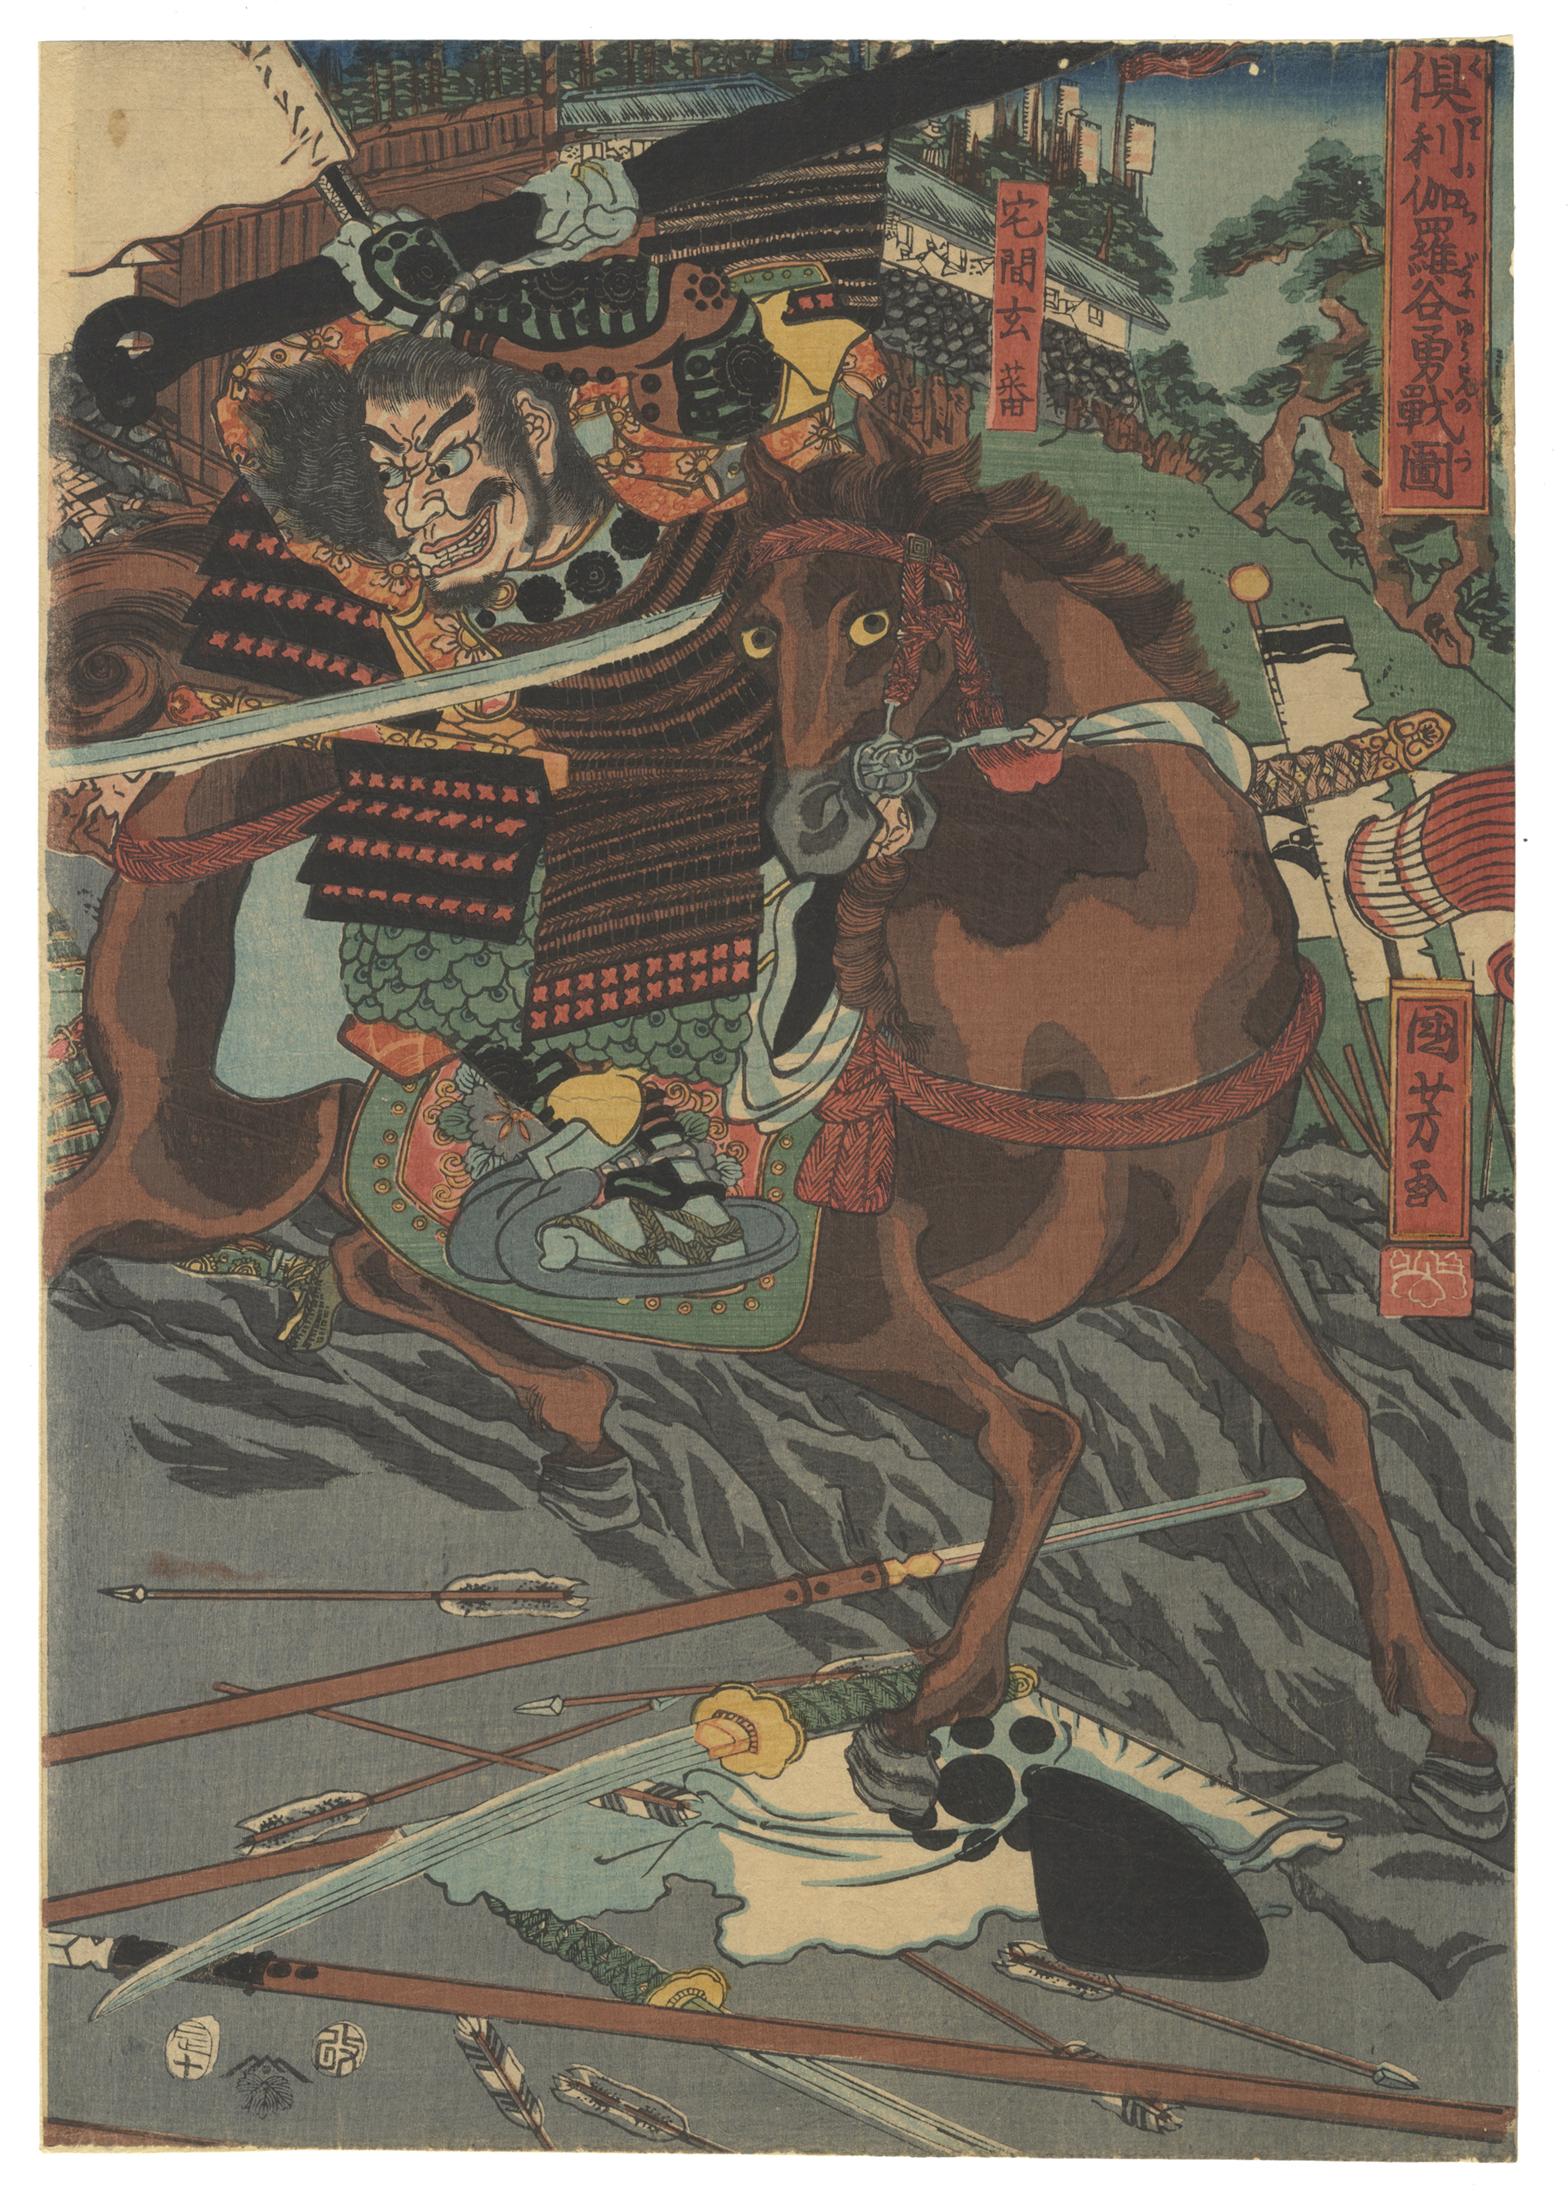 Artist: Kuniyoshi Utagawa (1798-1861)
Title: The Great Battle of Kurikara
Publisher: Tatsuya Kichizo
Date: 1856
Size: (R) 25.6 x 36.5, (C) 25.6 x 36.5, (L) 25.4 x 36.6 cm
Condition: Backed, trimmed, minor stains, holes and pinholes.

This print